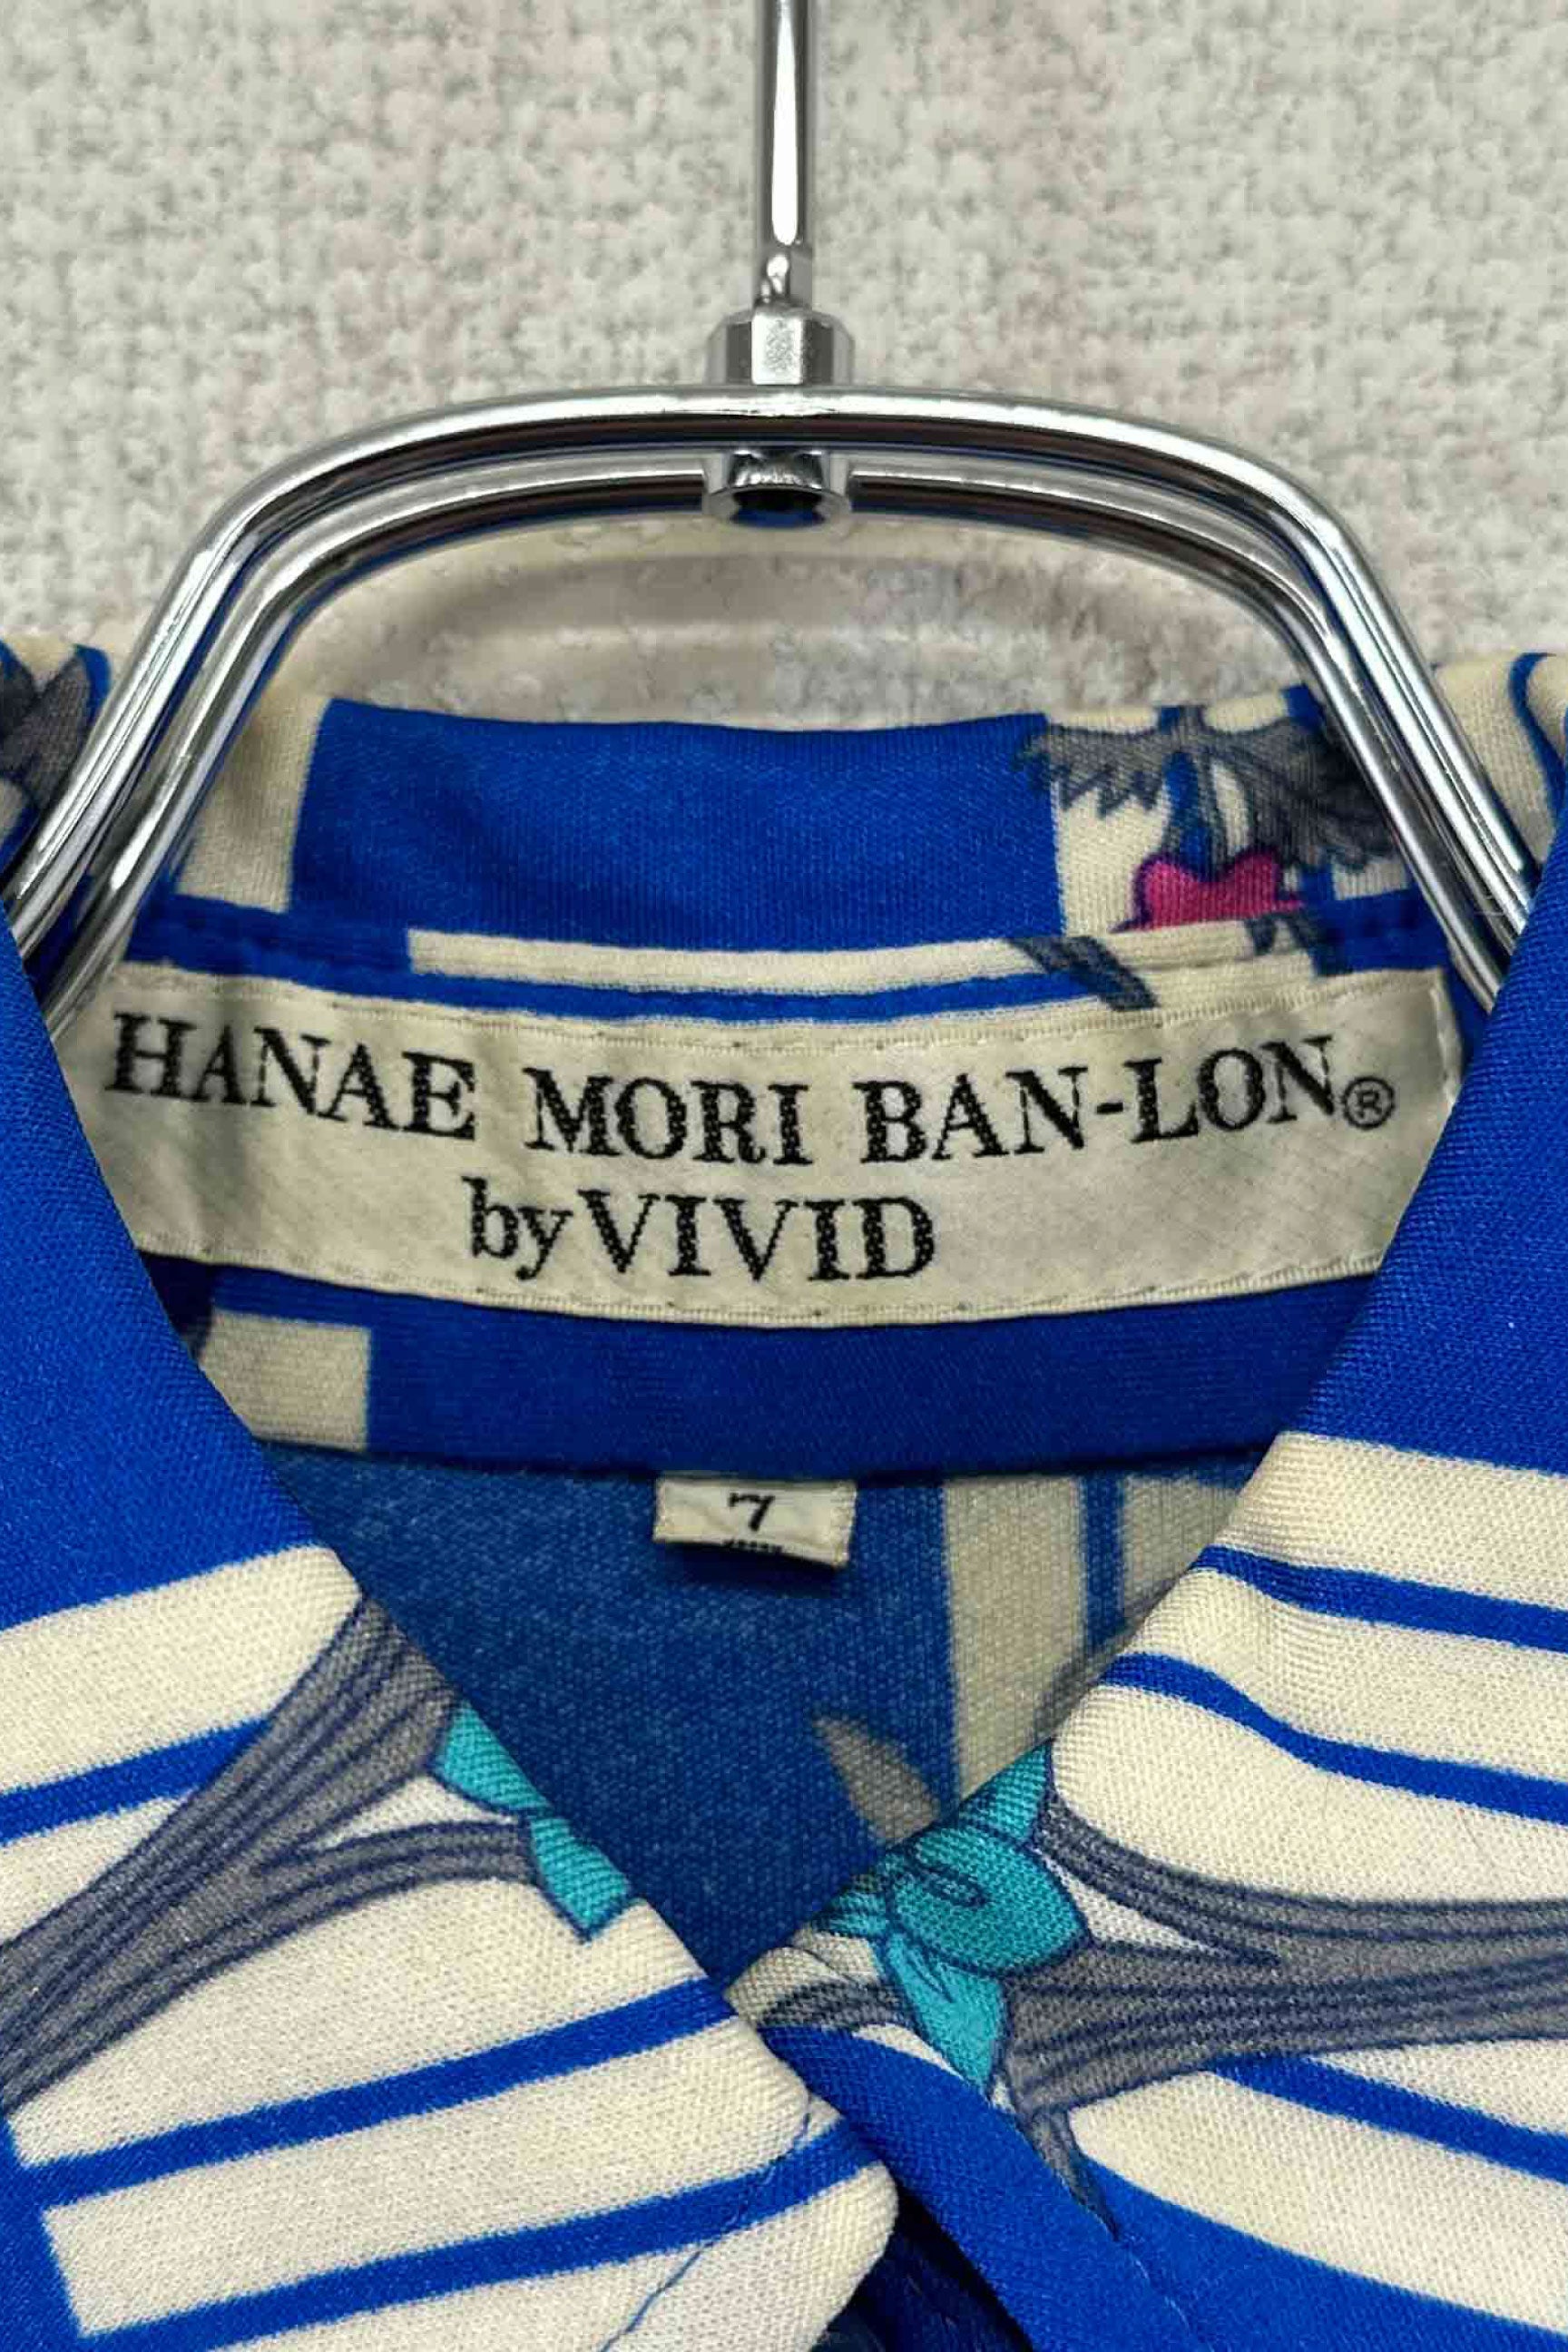 HANAE MORI BAN-LON by VIVID blue one-piece